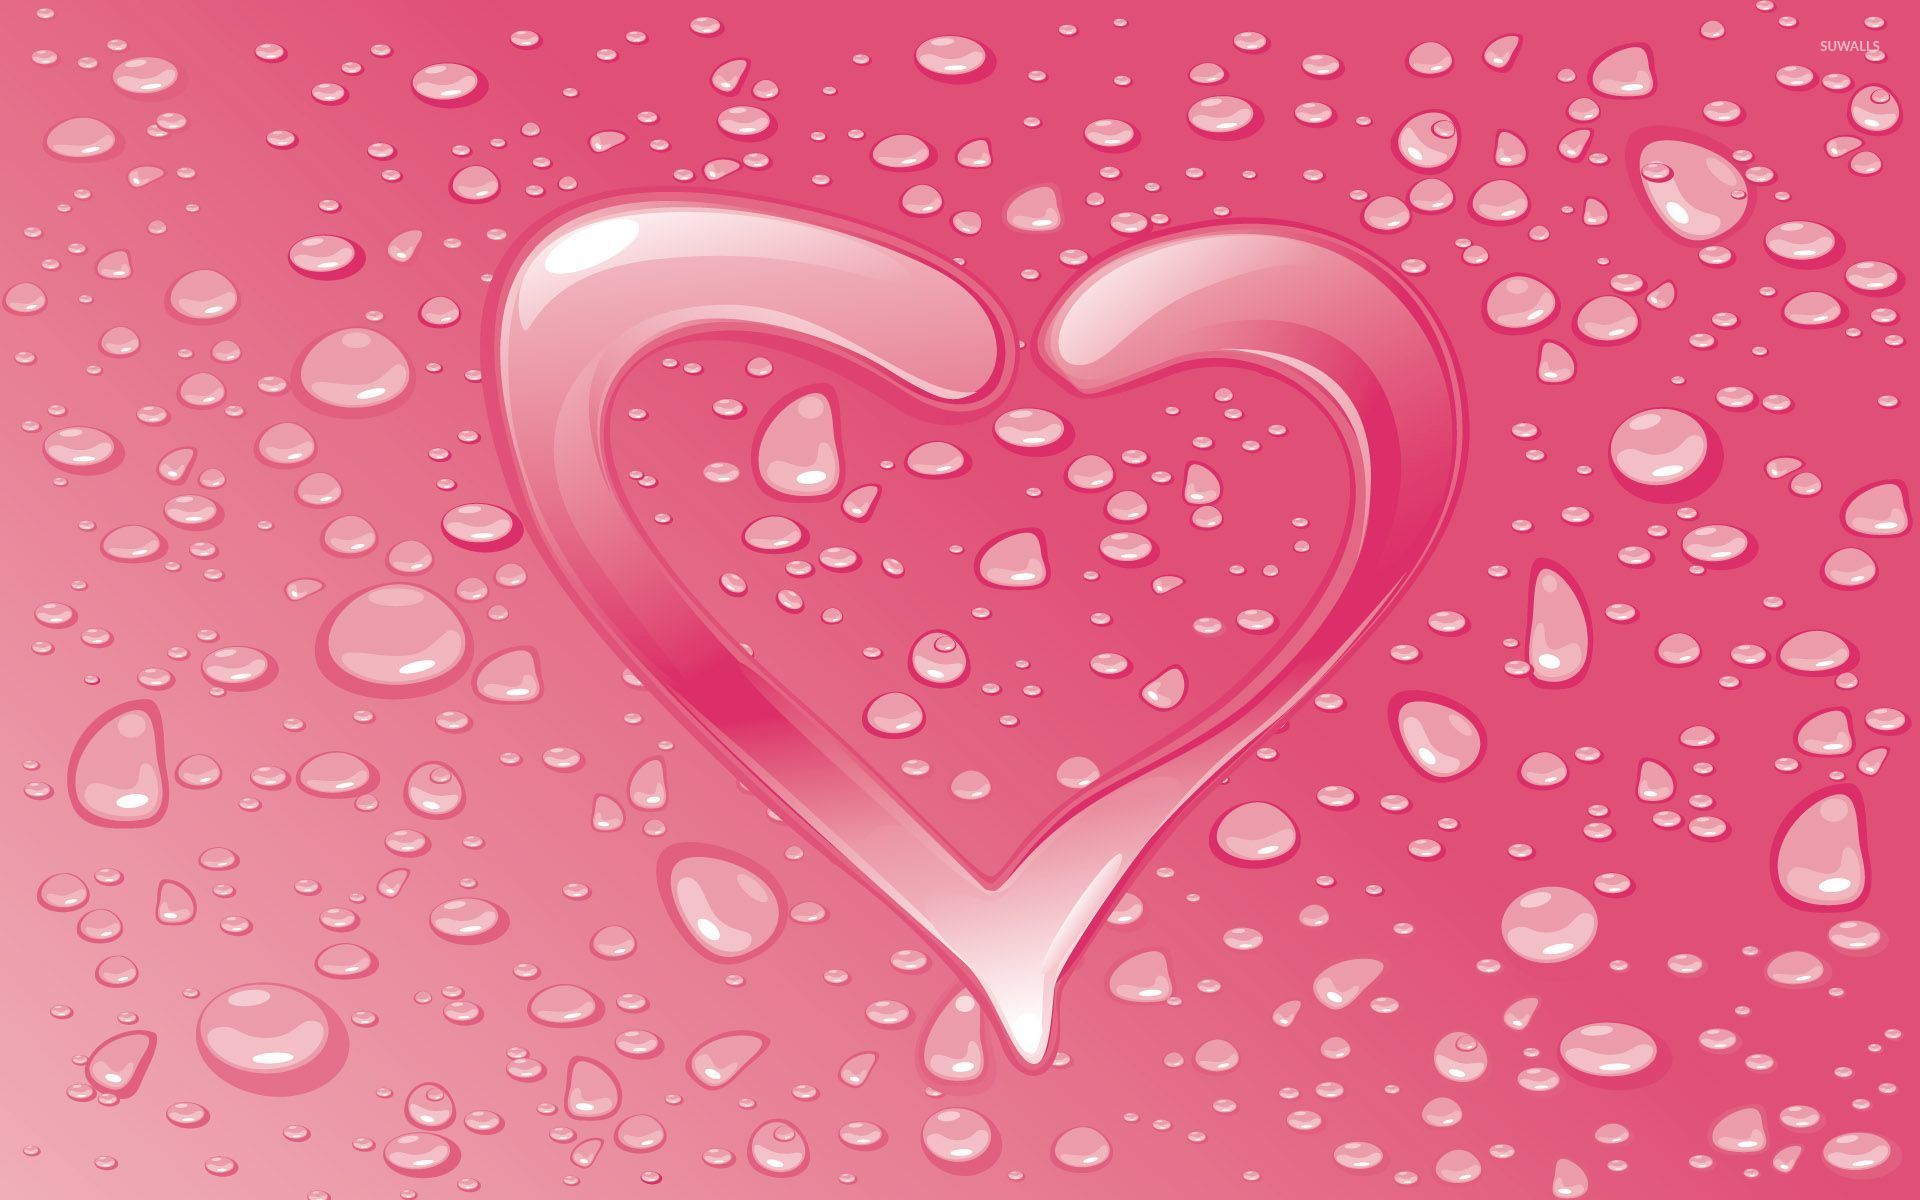 Water drops on the pink heart wallpaper   Digital Art wallpapers